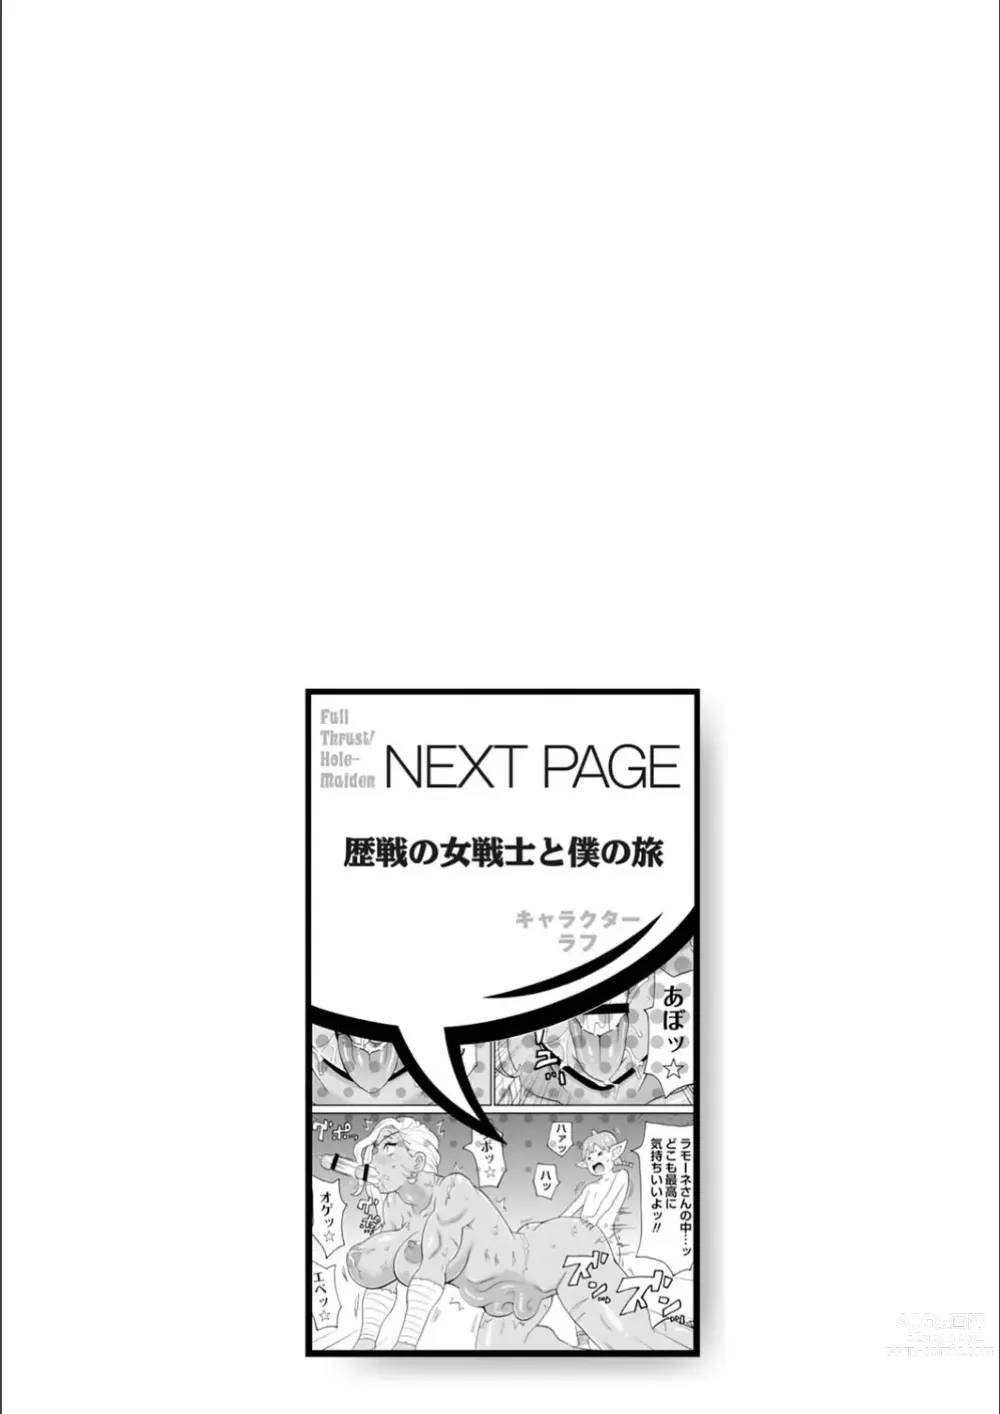 Page 256 of manga Full Thrust! Hole-Maiden